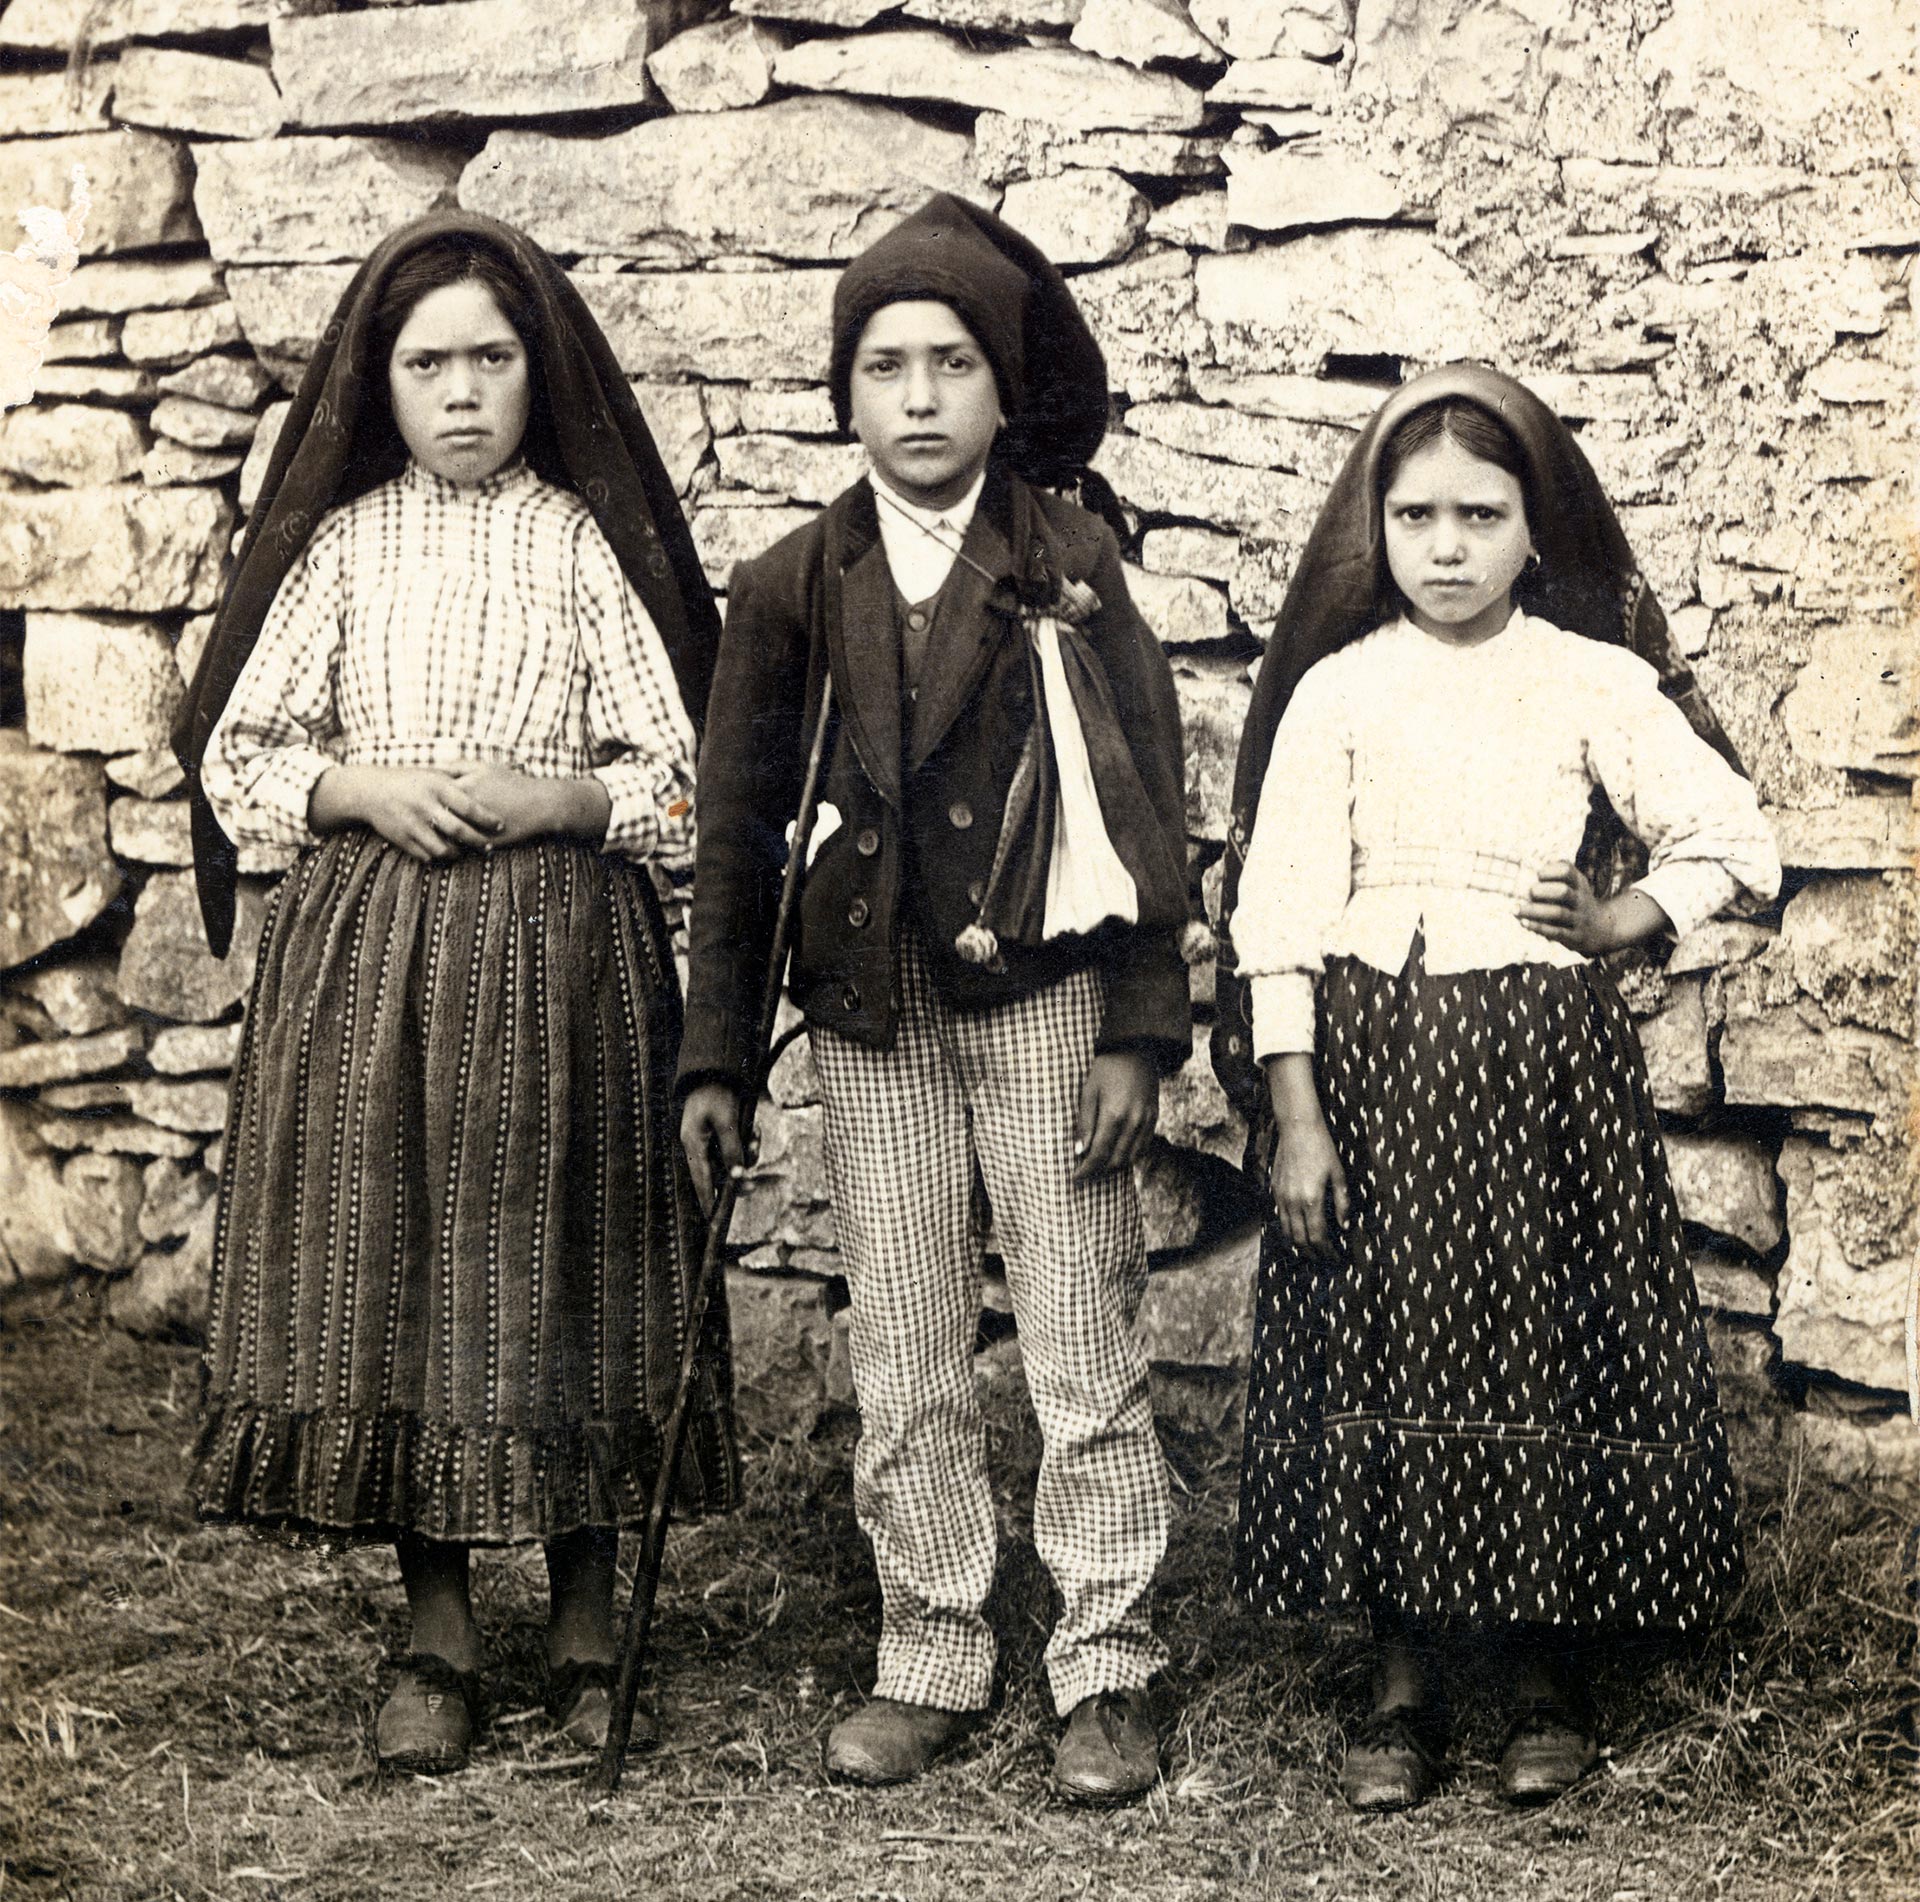 Lúcia Santos, Francisco and Jacinta Marto, 1917